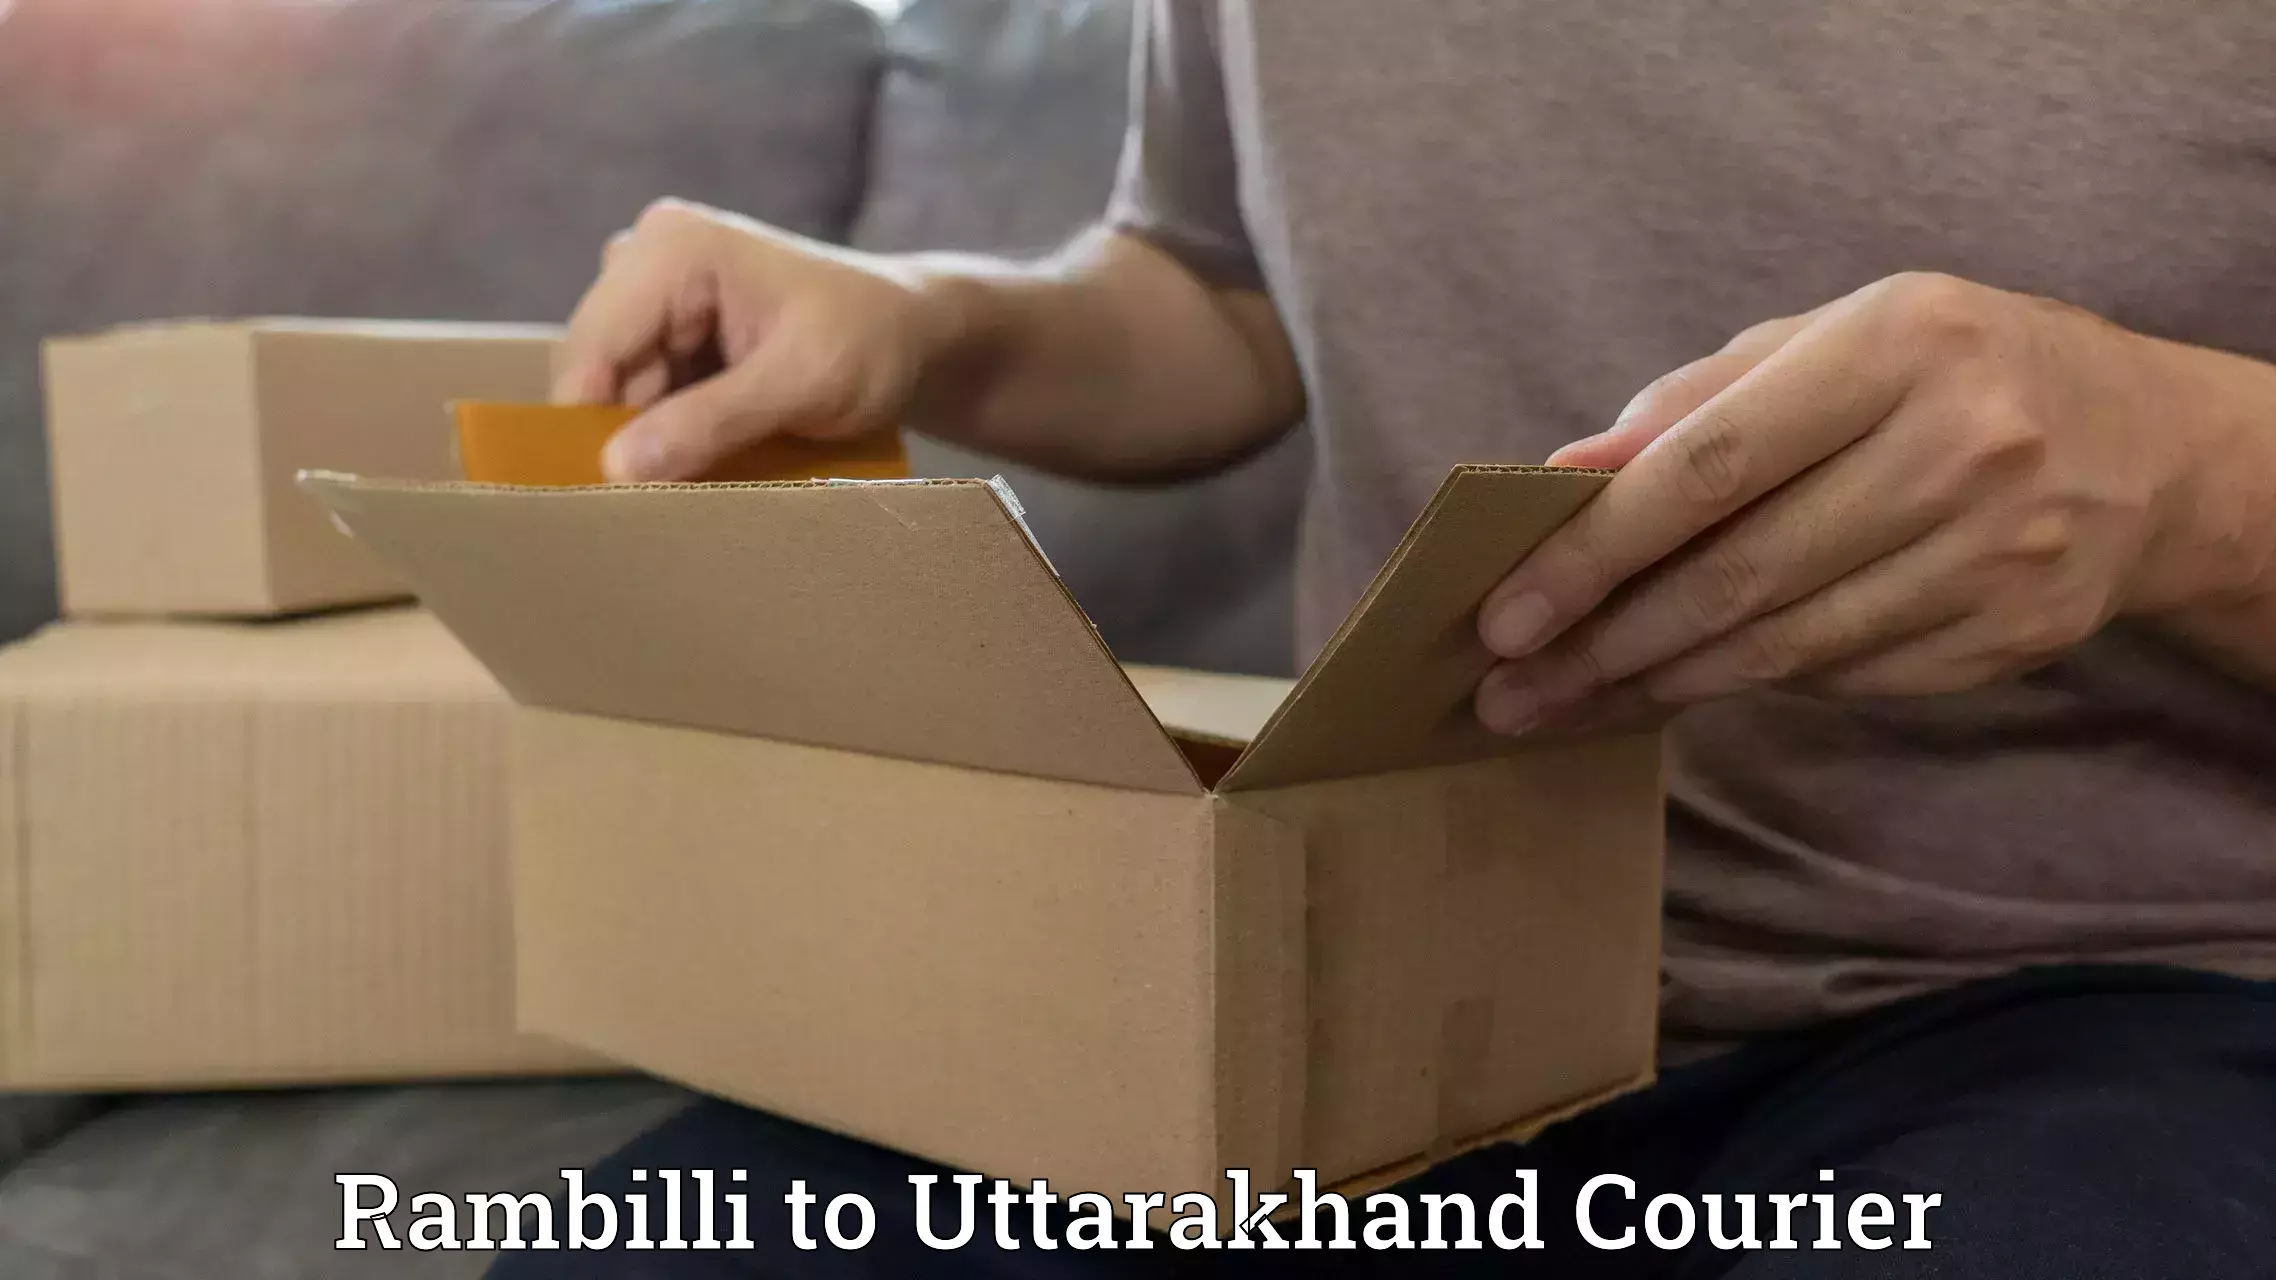 Professional courier handling Rambilli to IIT Roorkee